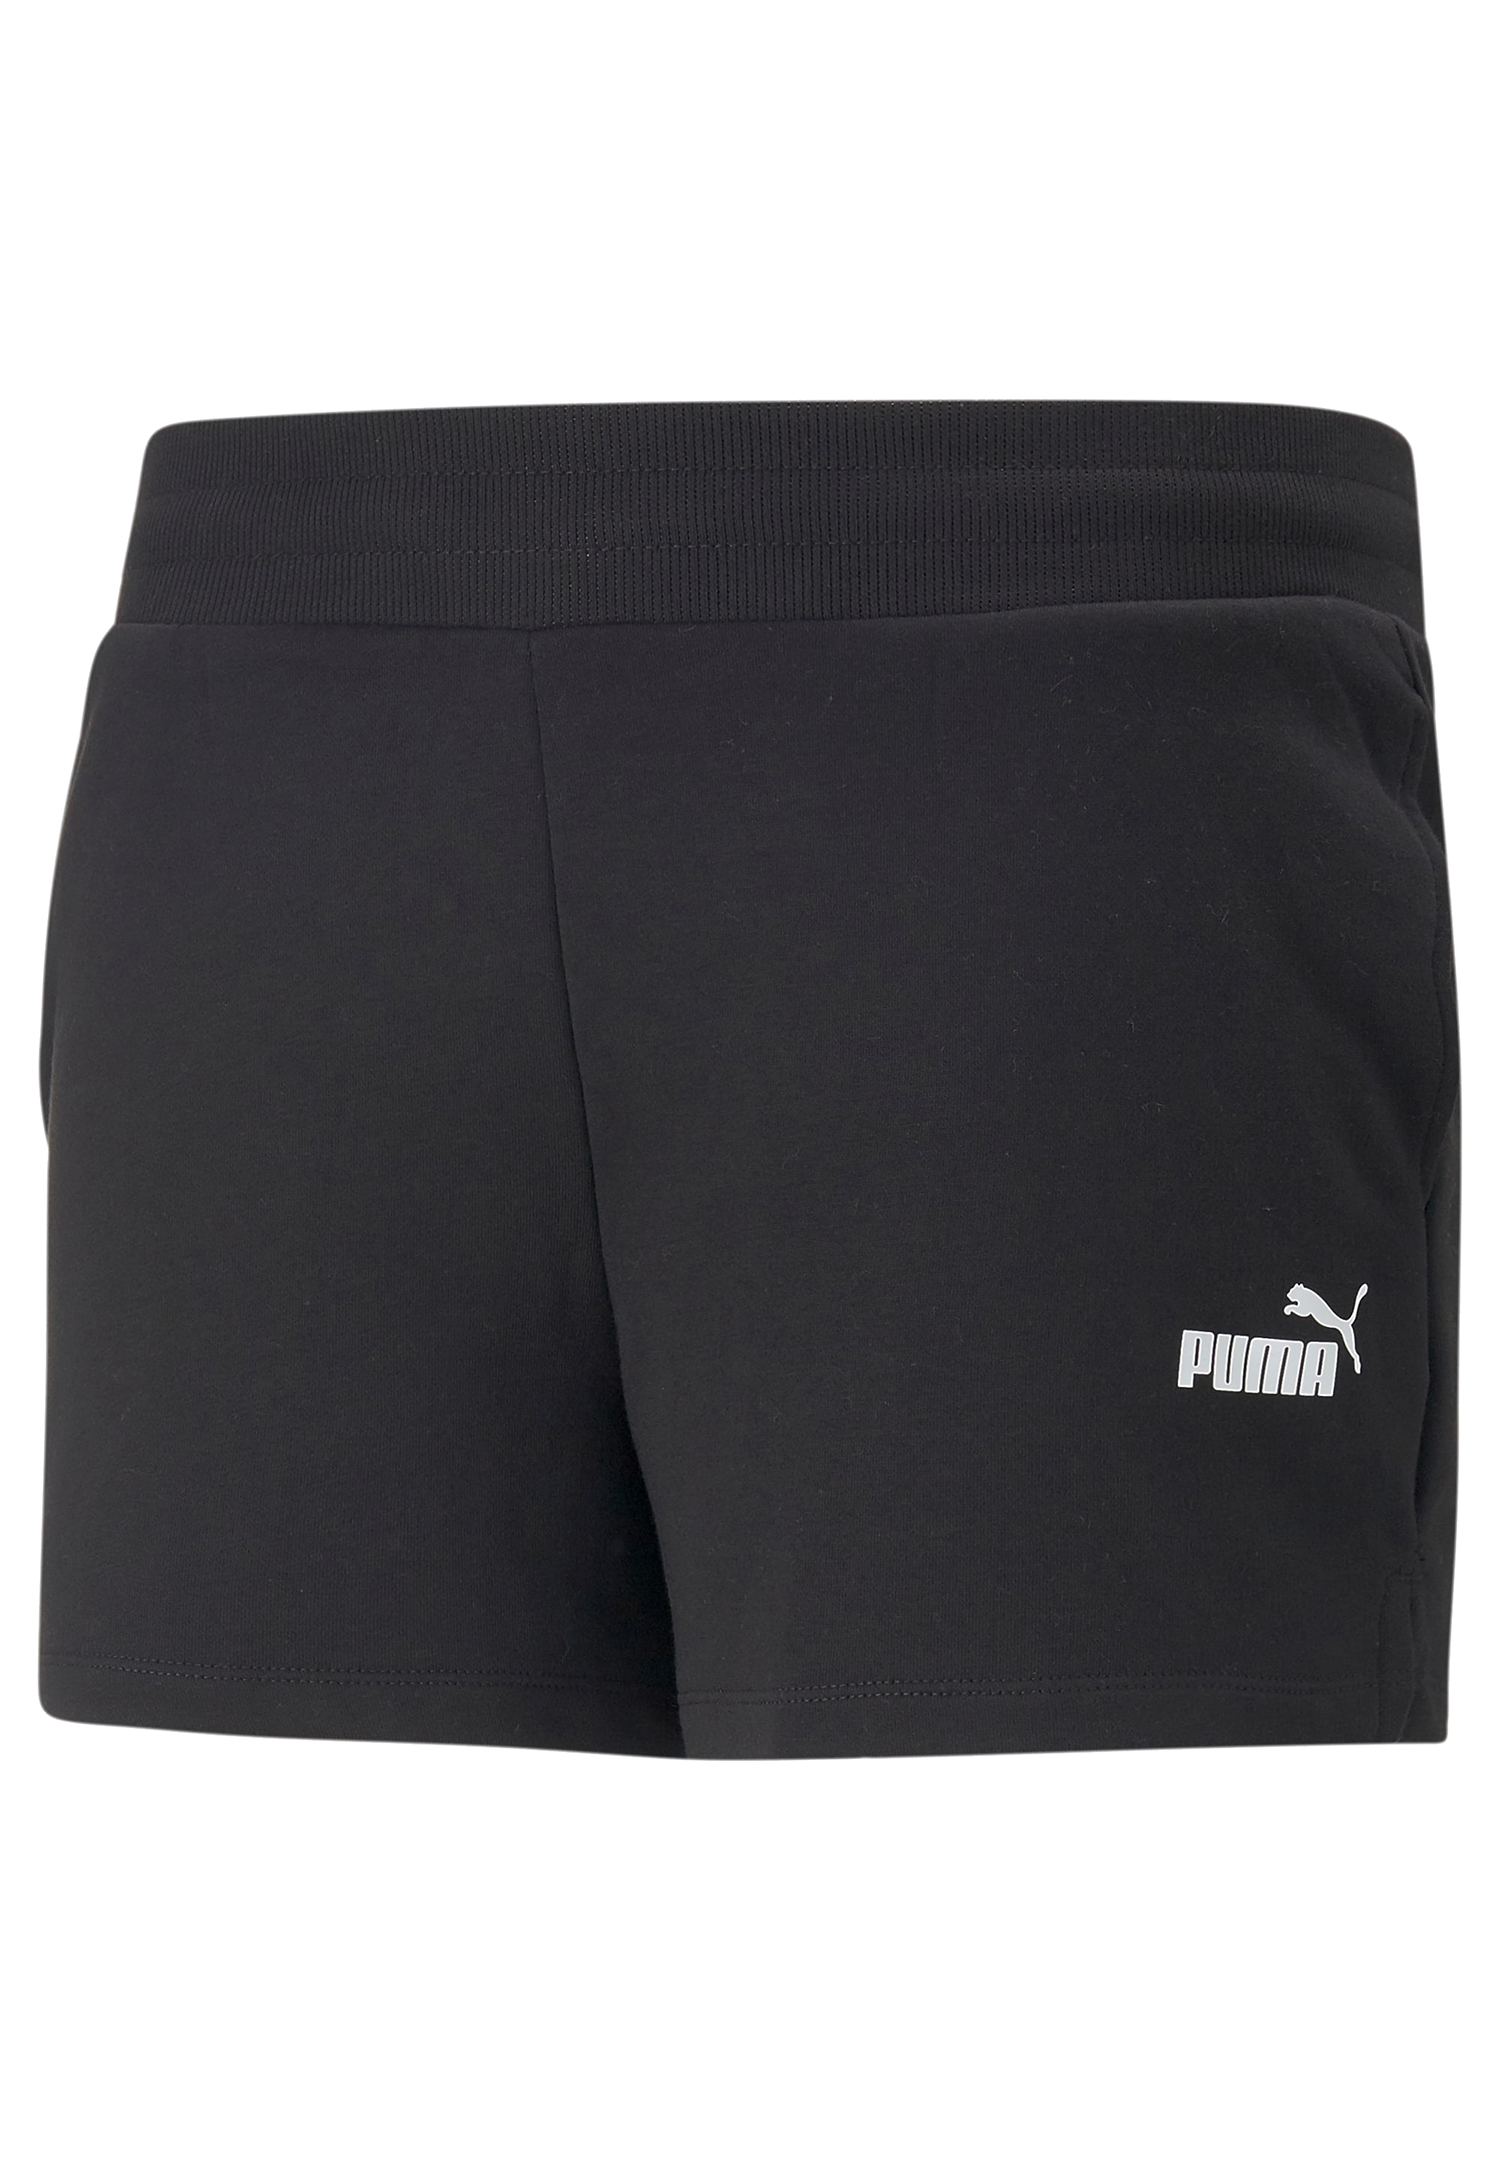 PUMA Ess Sweat Shorts TR PLUS Damen Sport Trainings Shorts OVERSIZE 847149 schwarz